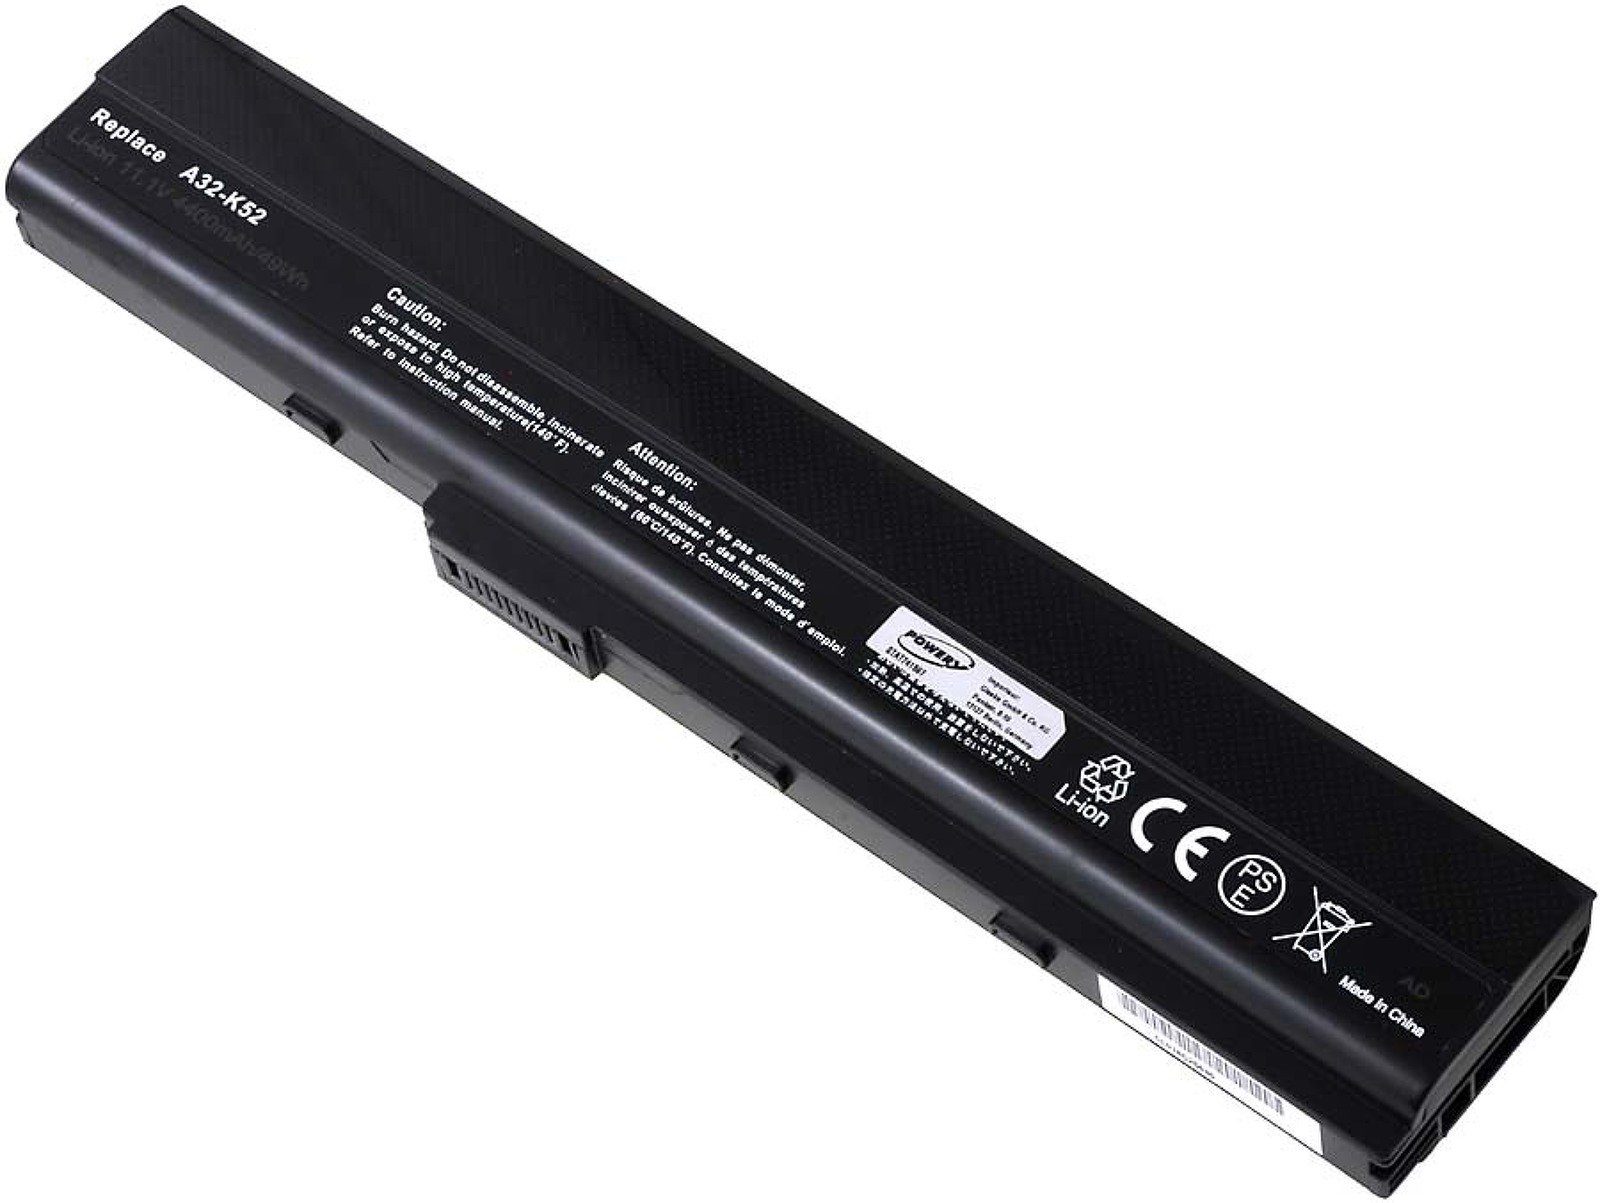 Asus (11.1 V) für 4400 mAh Akku Standardakku K52 Powery Laptop-Akku